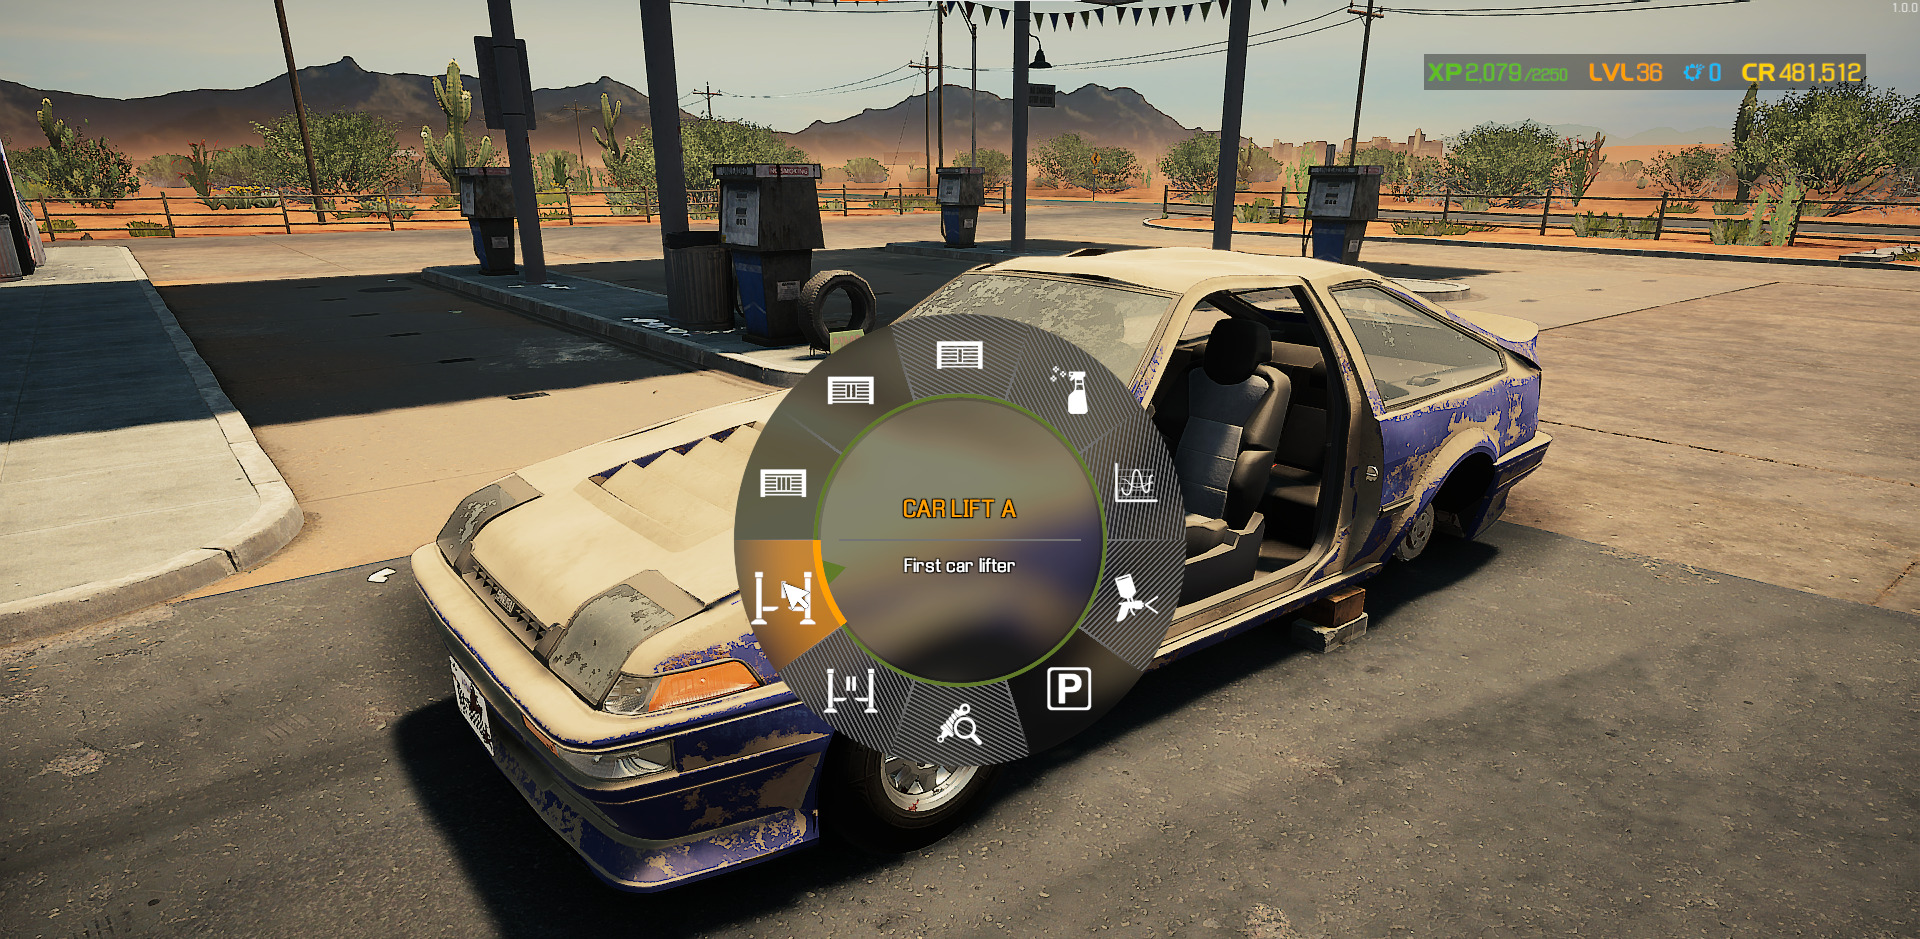 A screenshot showing the Car Lift A command in Car Mechanic Simulator